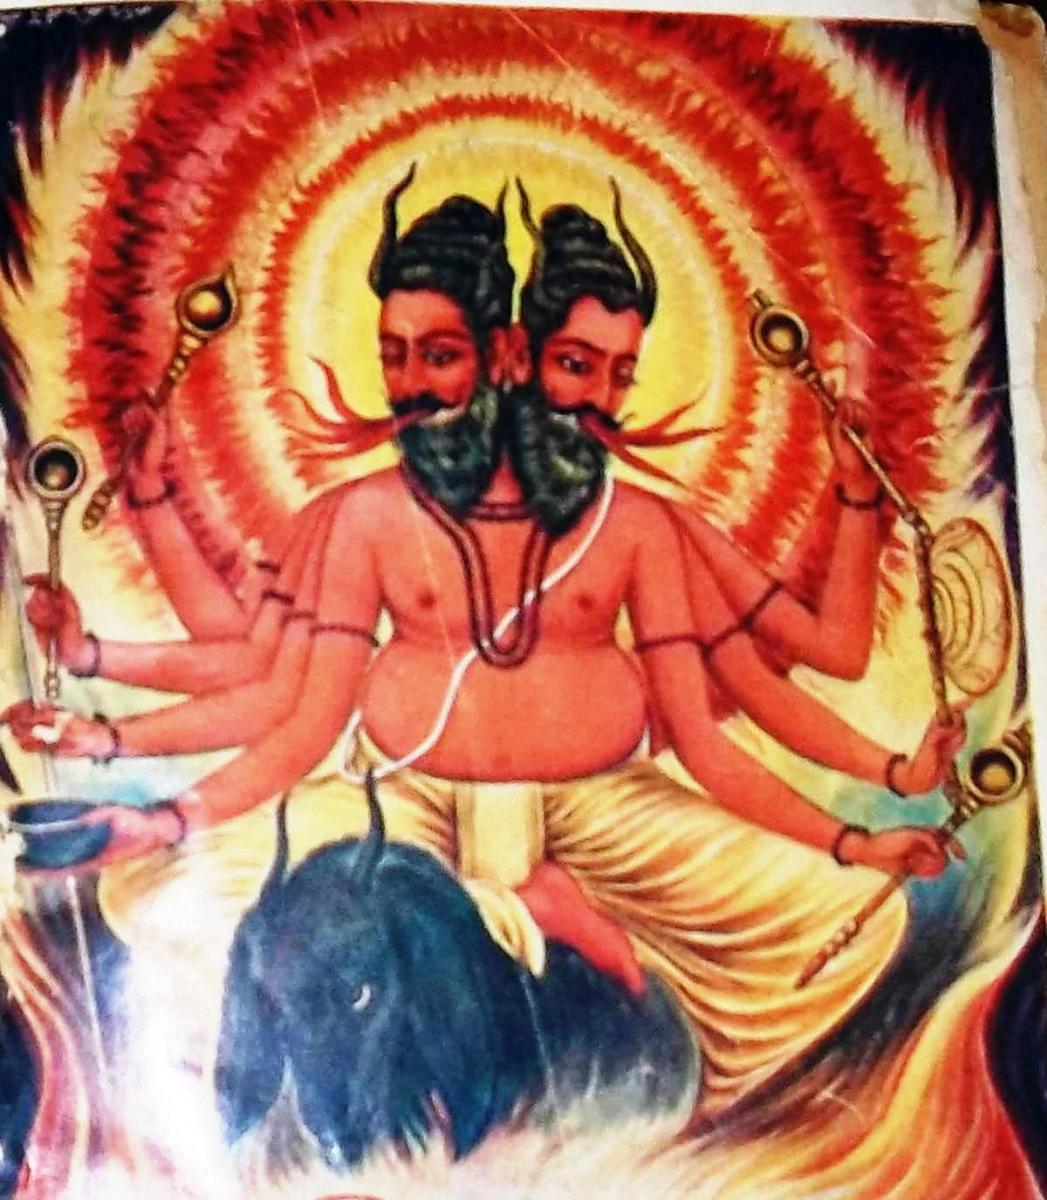 Agni (Vedic god of fire), as described in Narada Purana 1.51.48